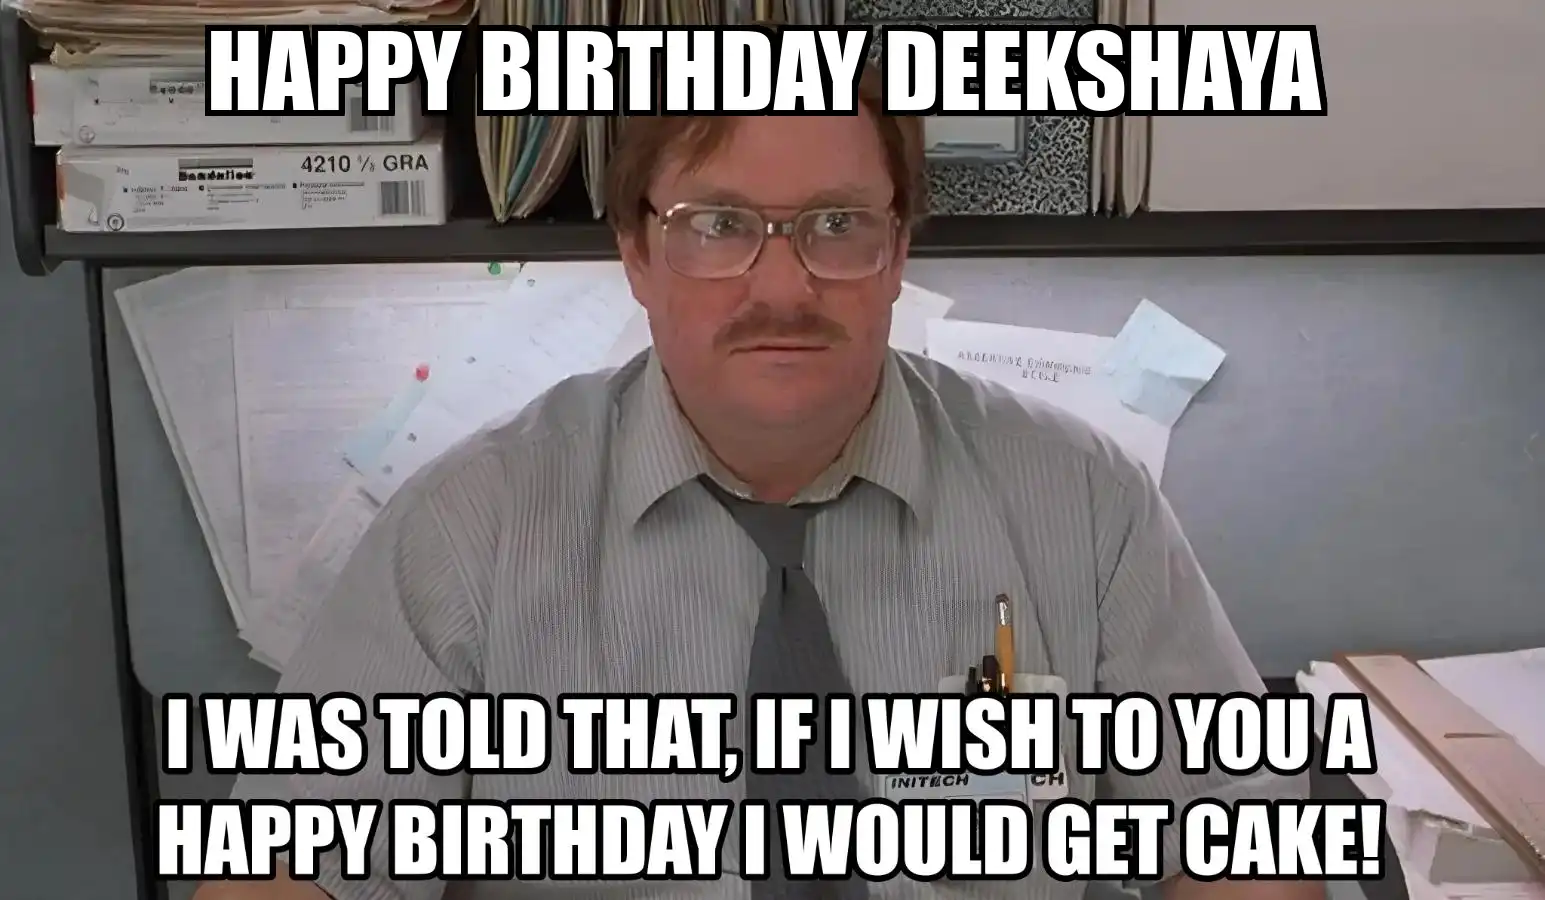 Happy Birthday Deekshaya I Would Get A Cake Meme